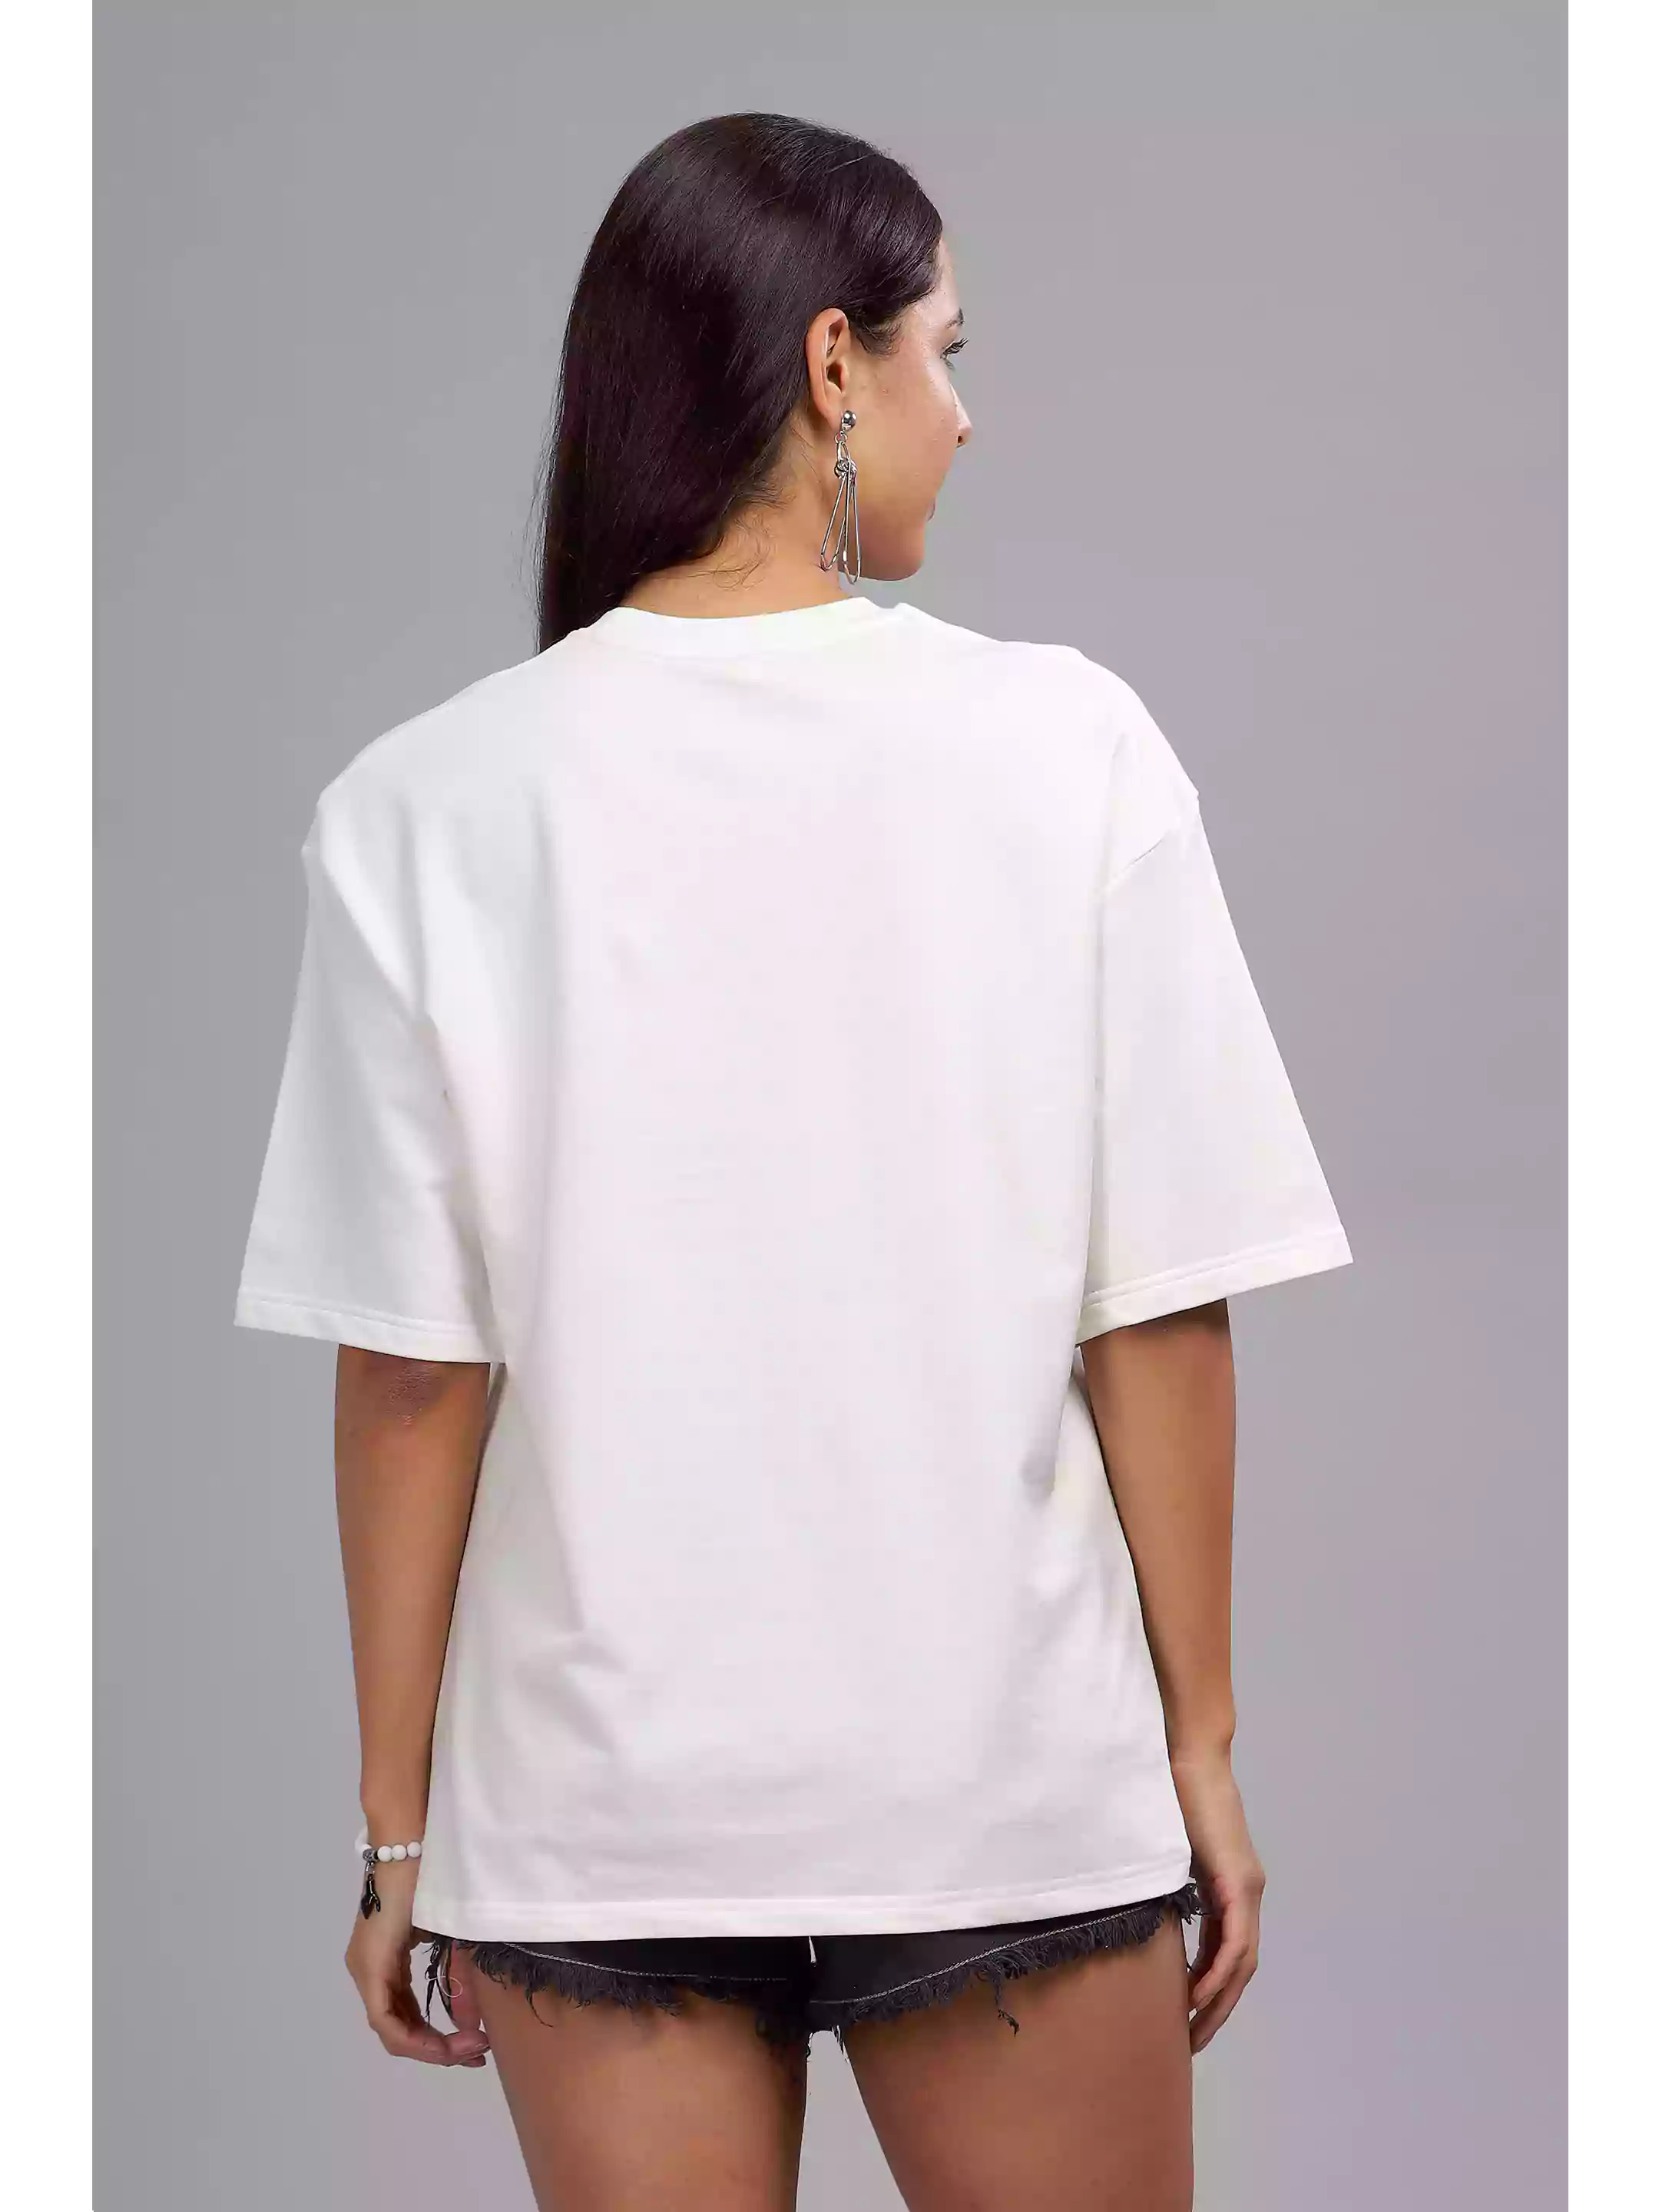 Stay Inspired- Sukhiaatma Unisex Oversized White T-shirt